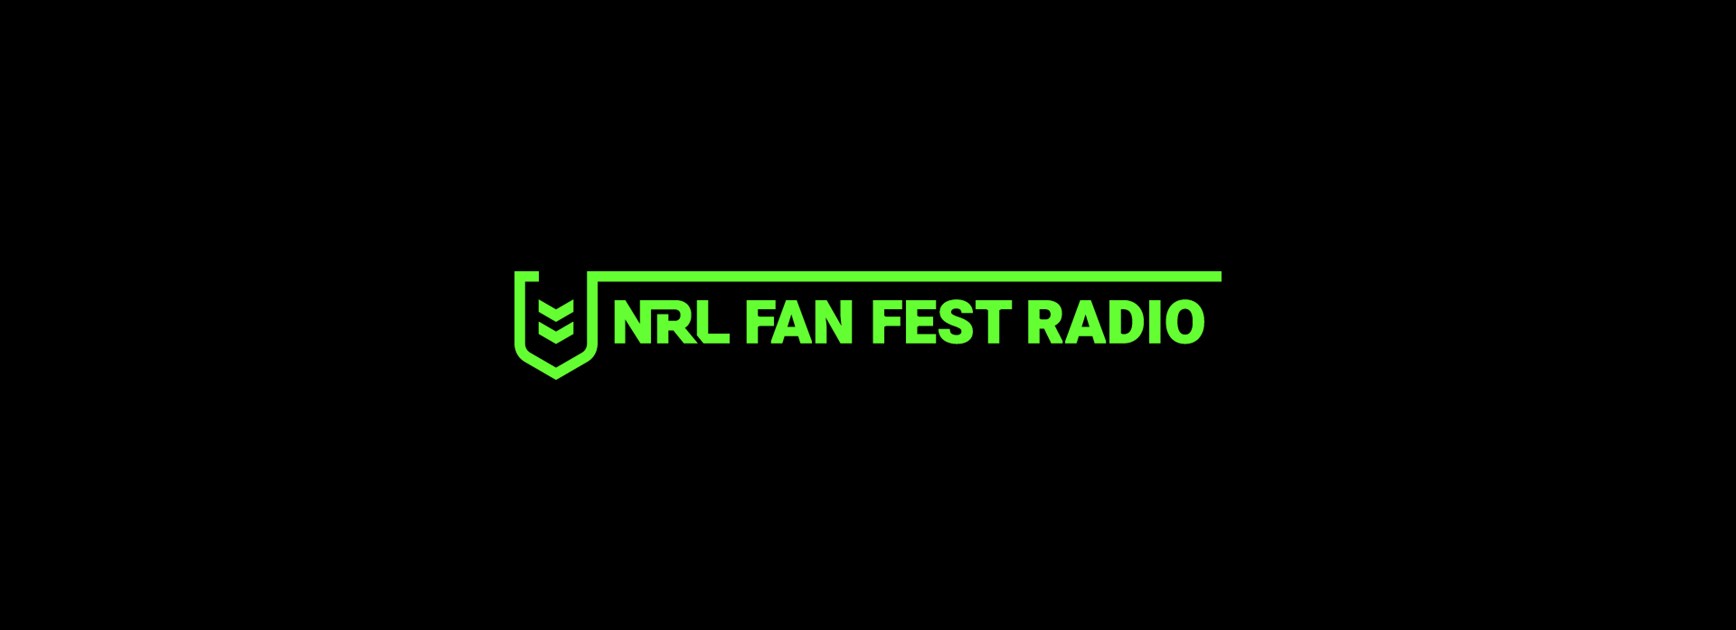 Tune into Fan Fest radio for NRL grand final news